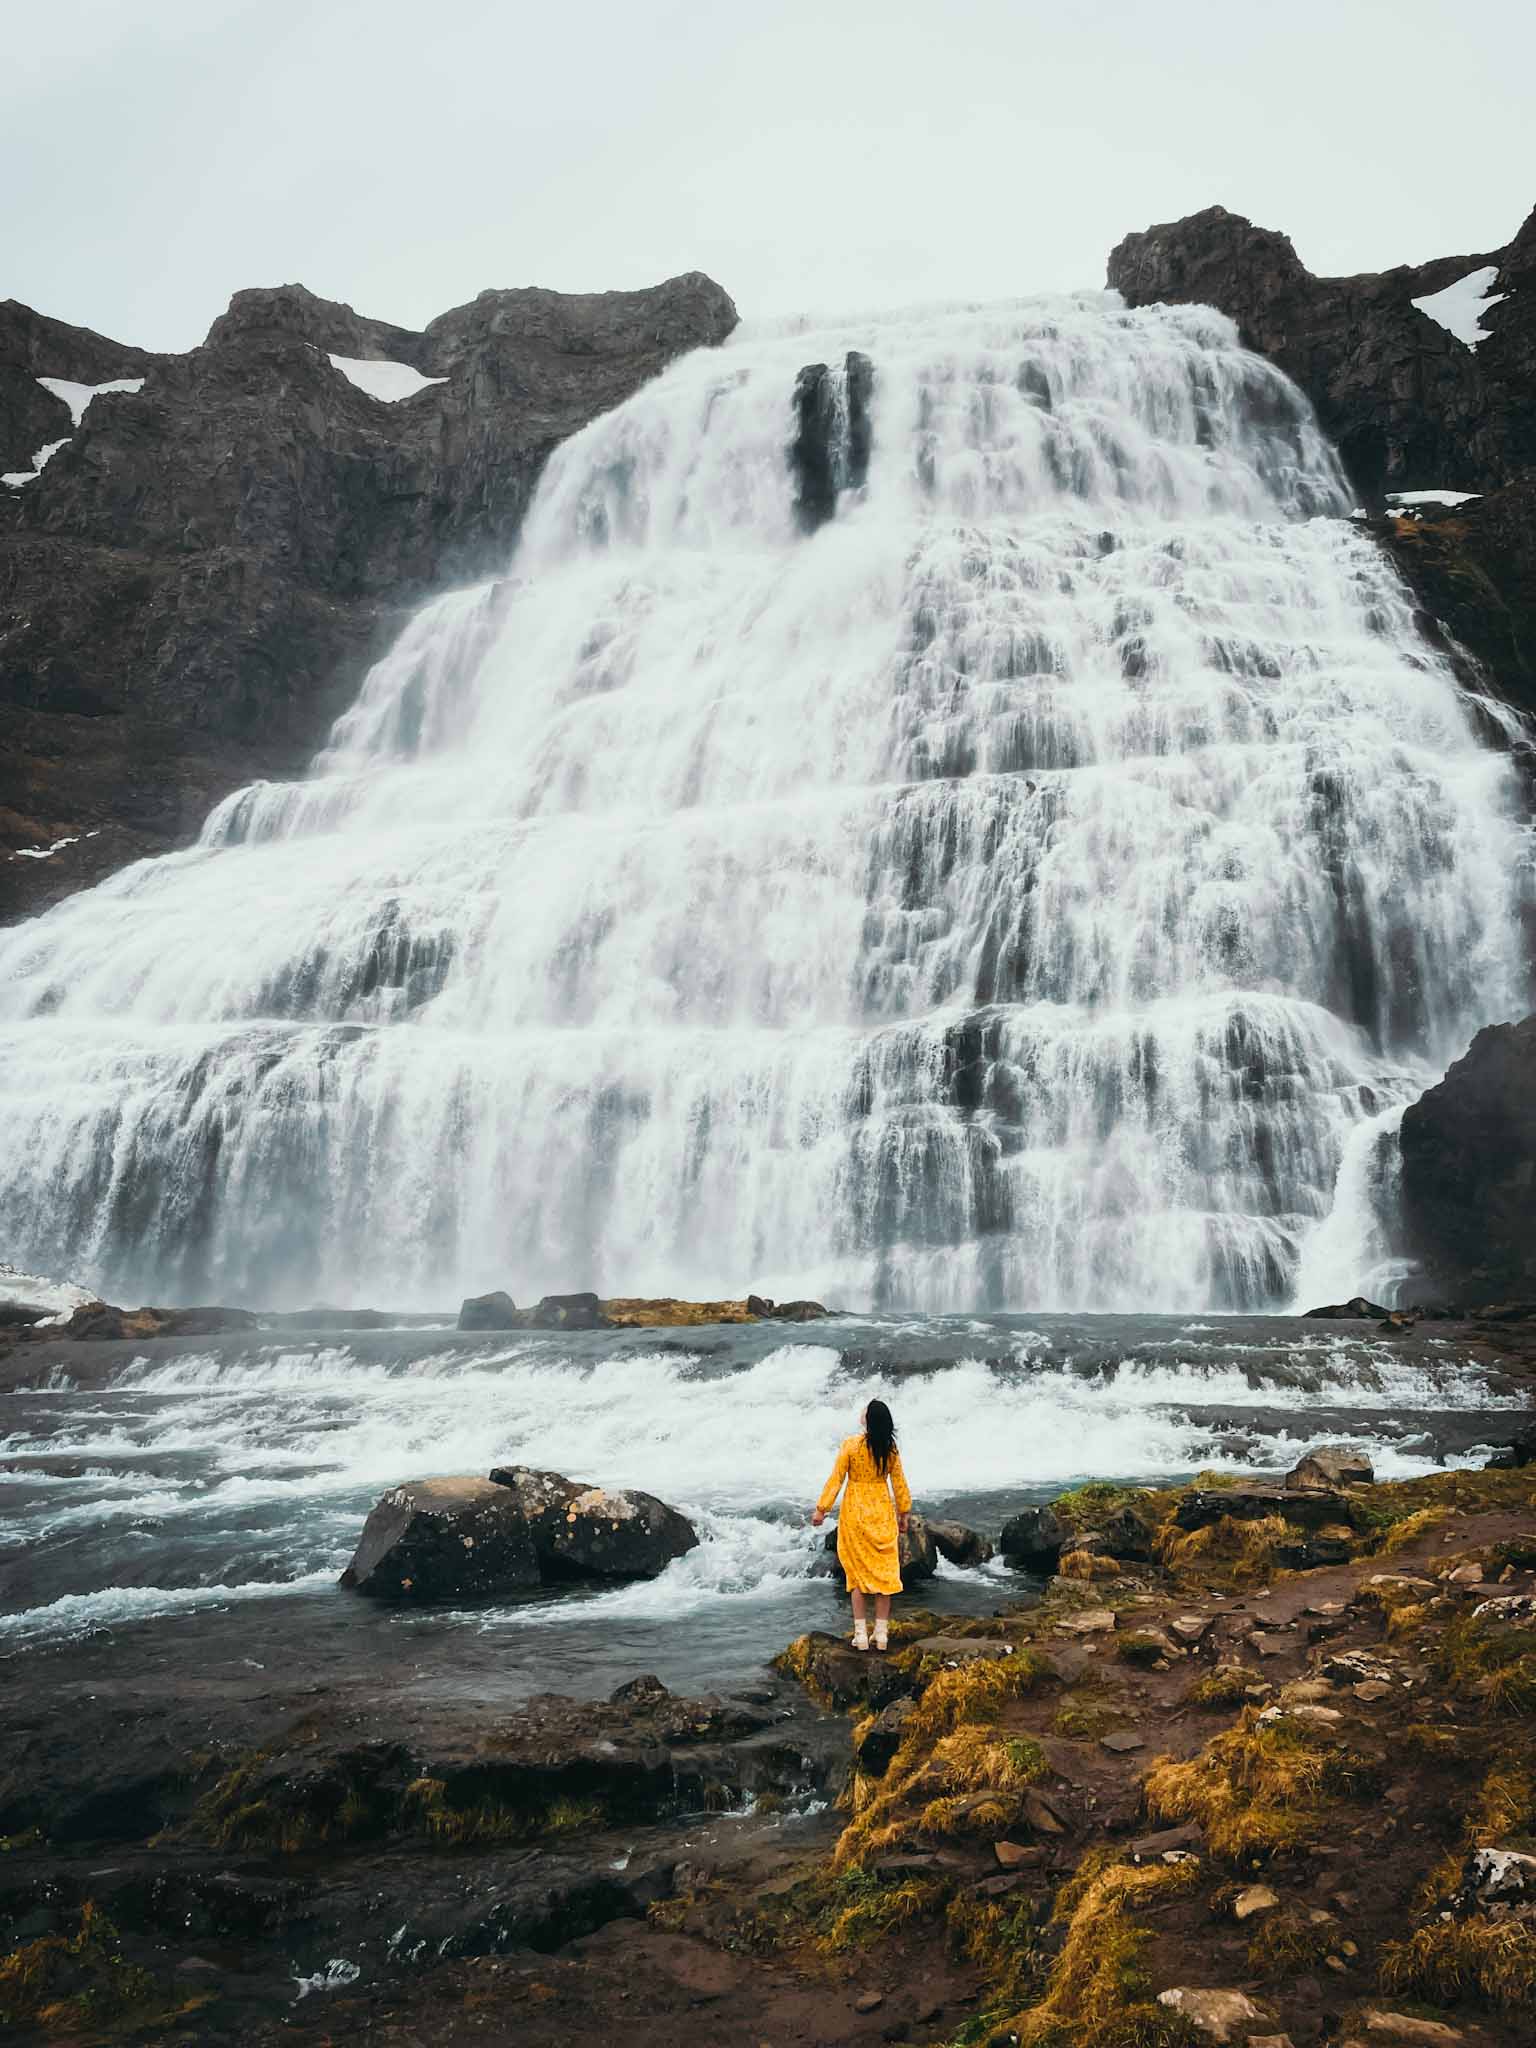 Ring Road in Iceland: Best waterfalls in Iceland - Dynjandi